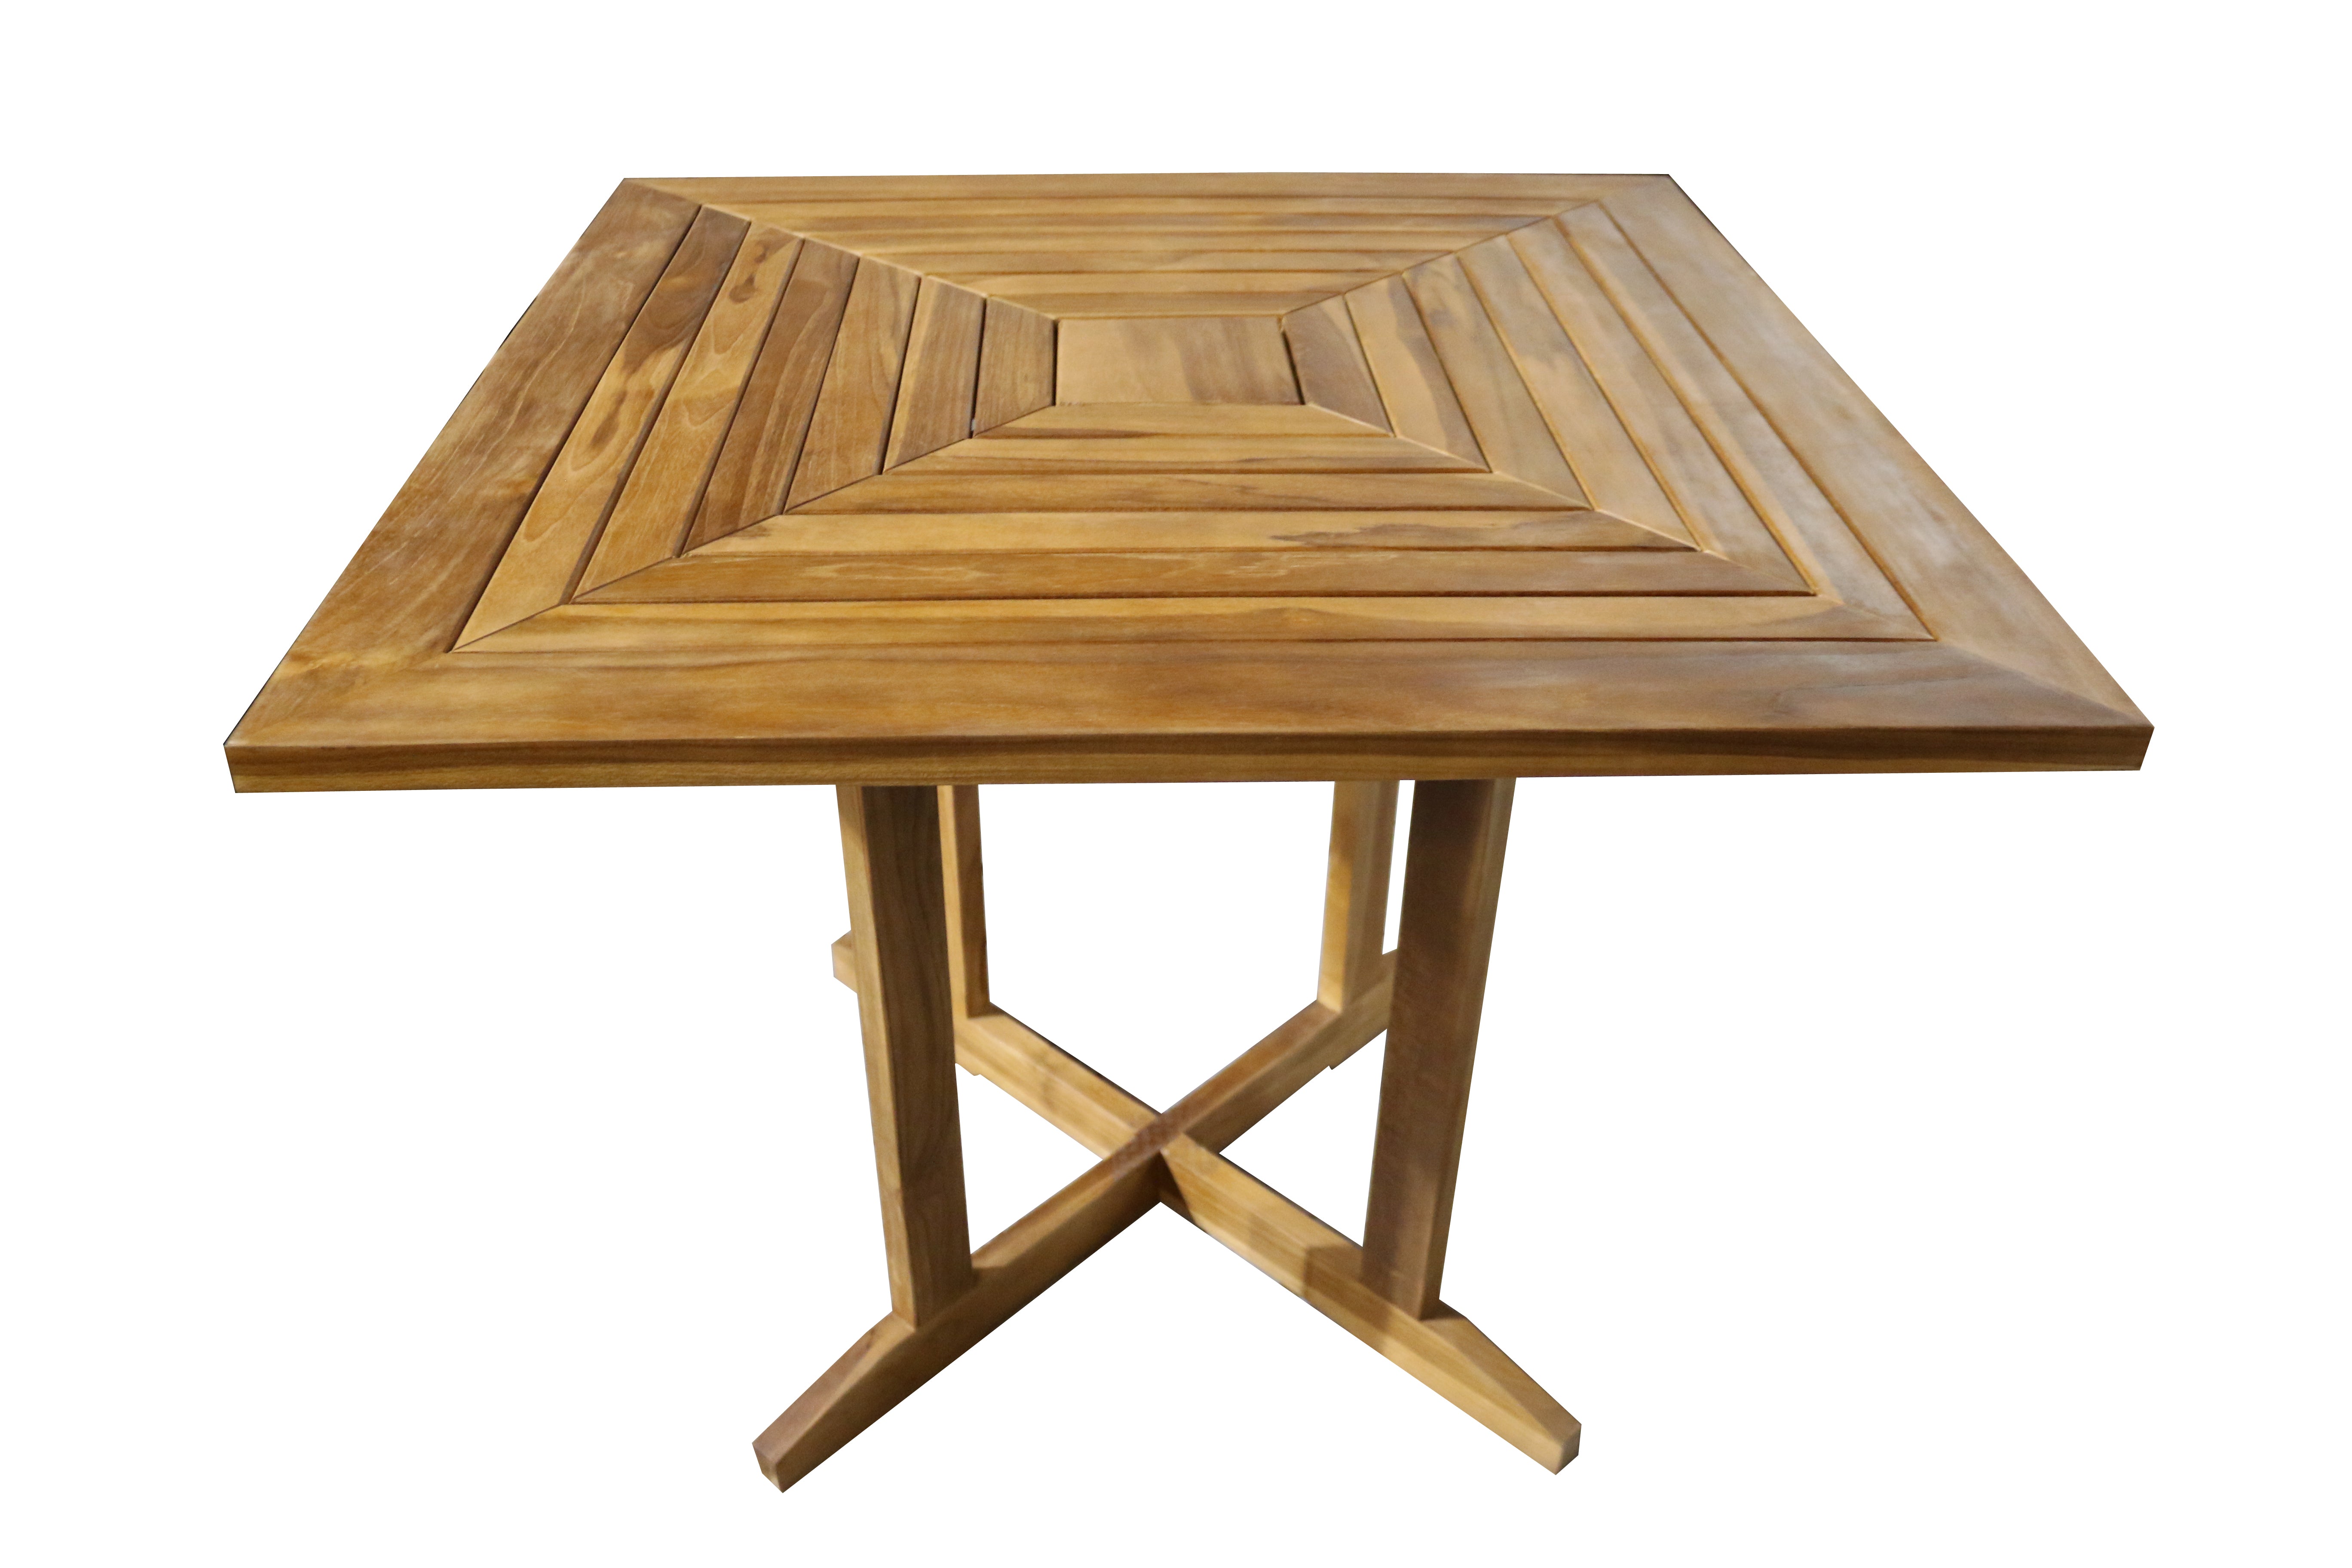 ALA TEAK Wood Patio Outside Indoor Outdoor Garden Yard Waterproof Table Furniture